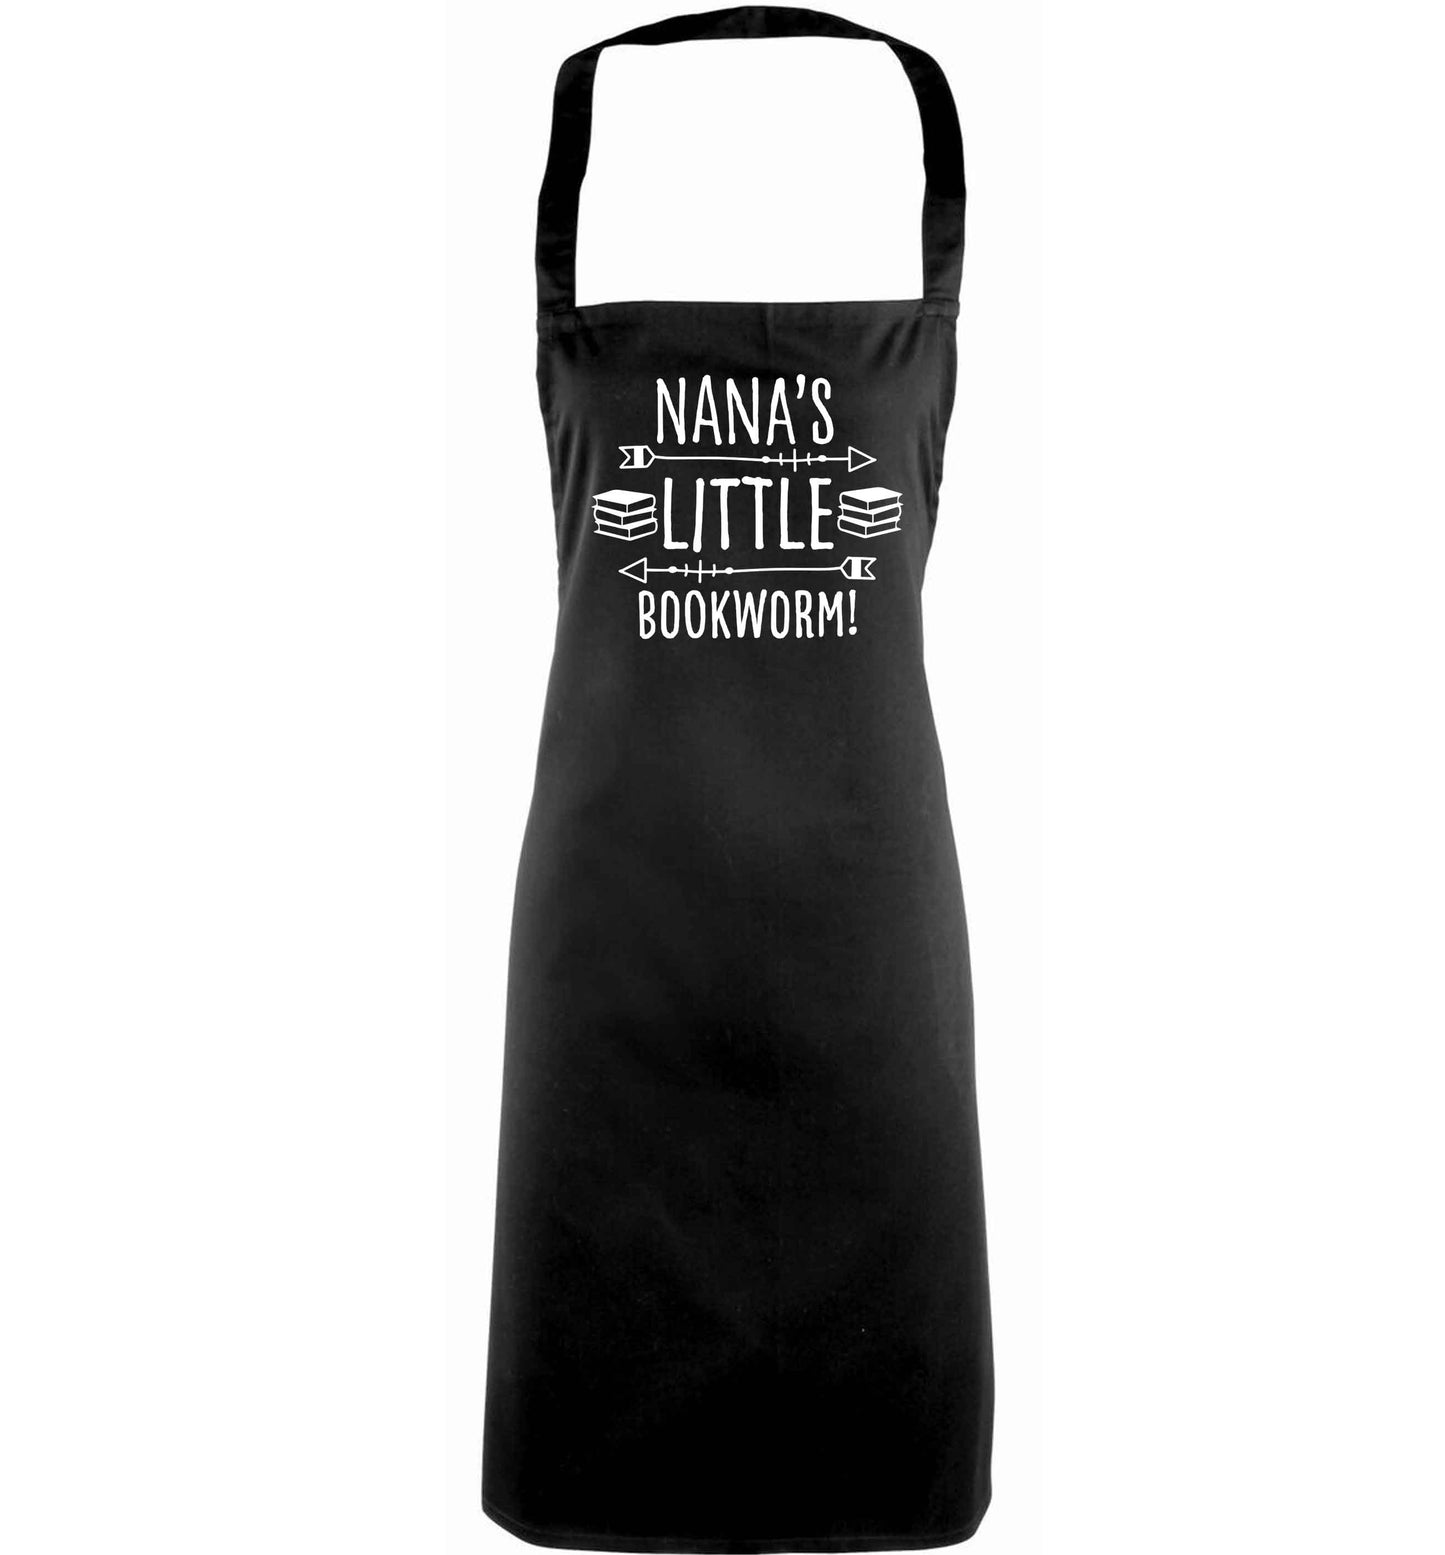 Nana's little bookworm adults black apron